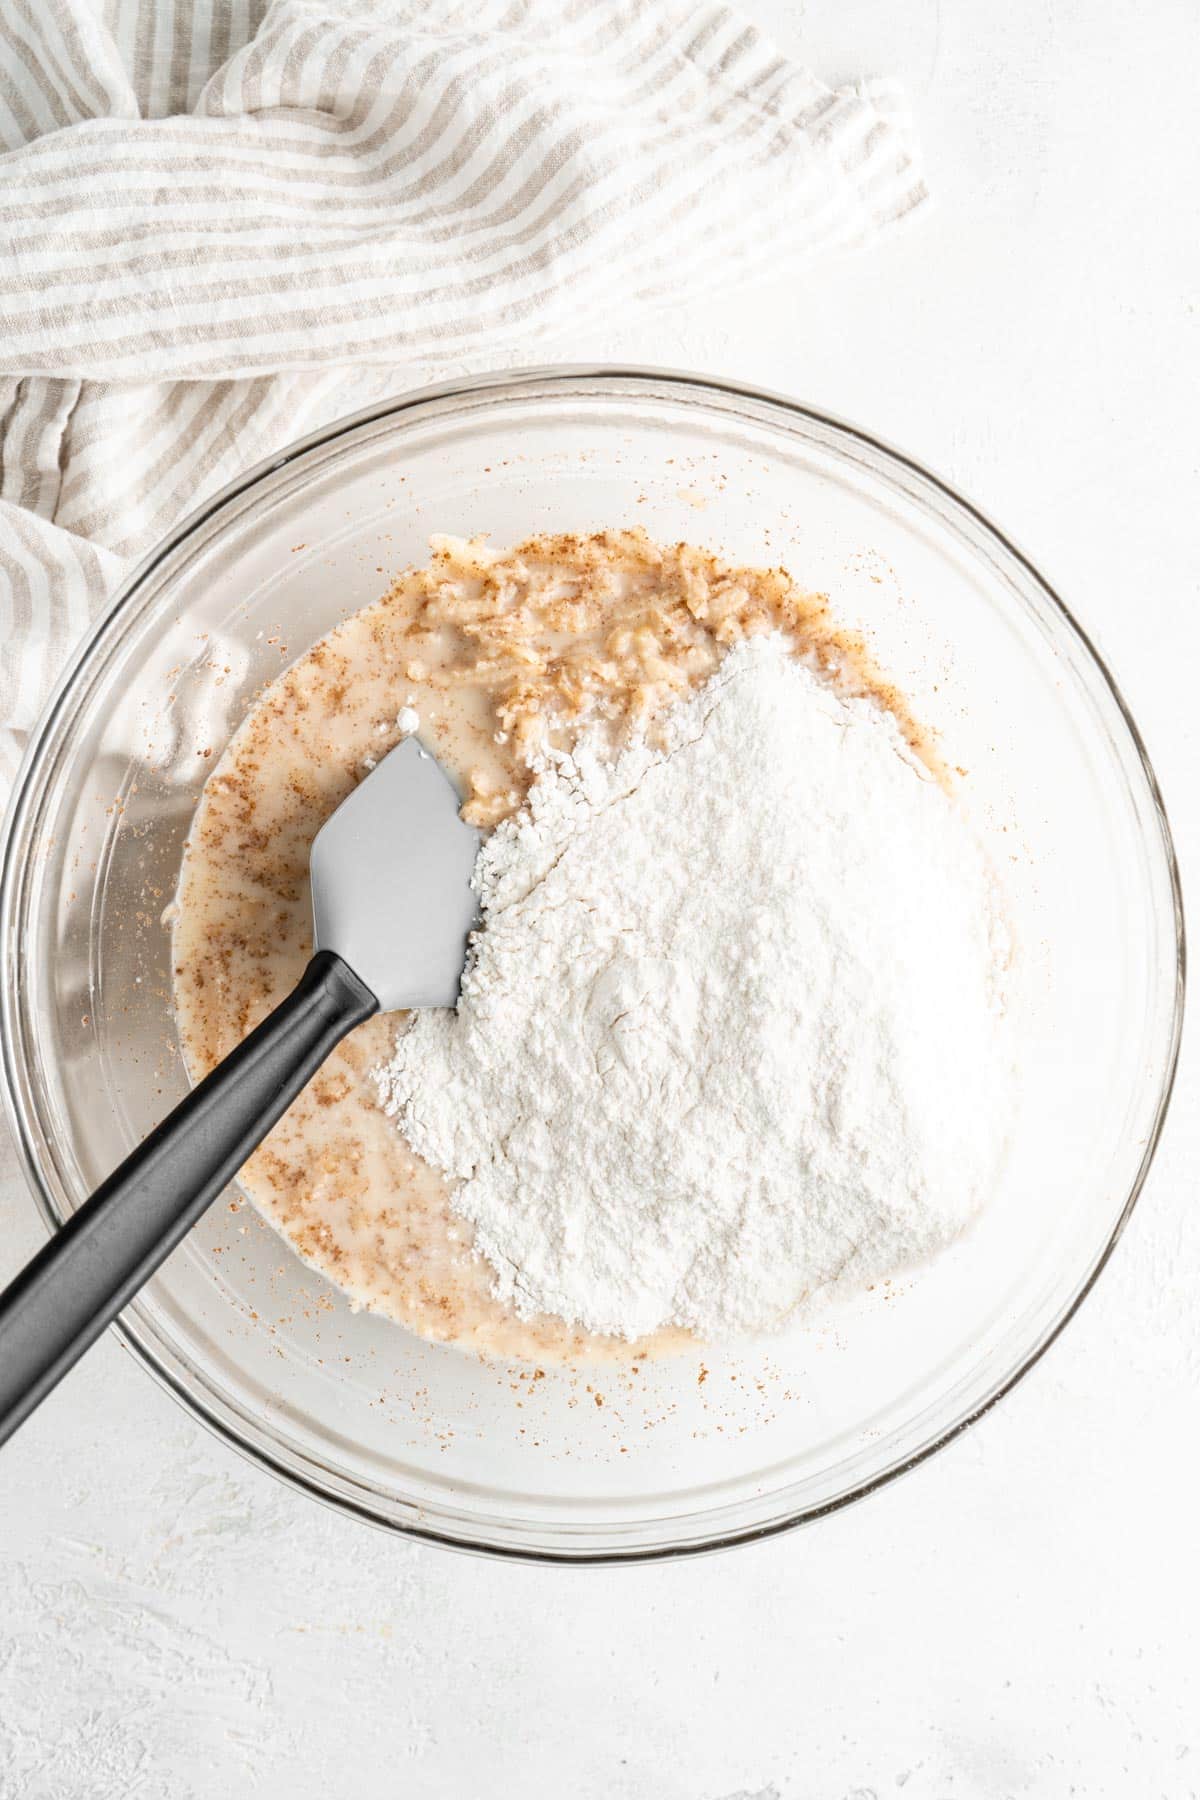 stirring flour into wet batter ingredients